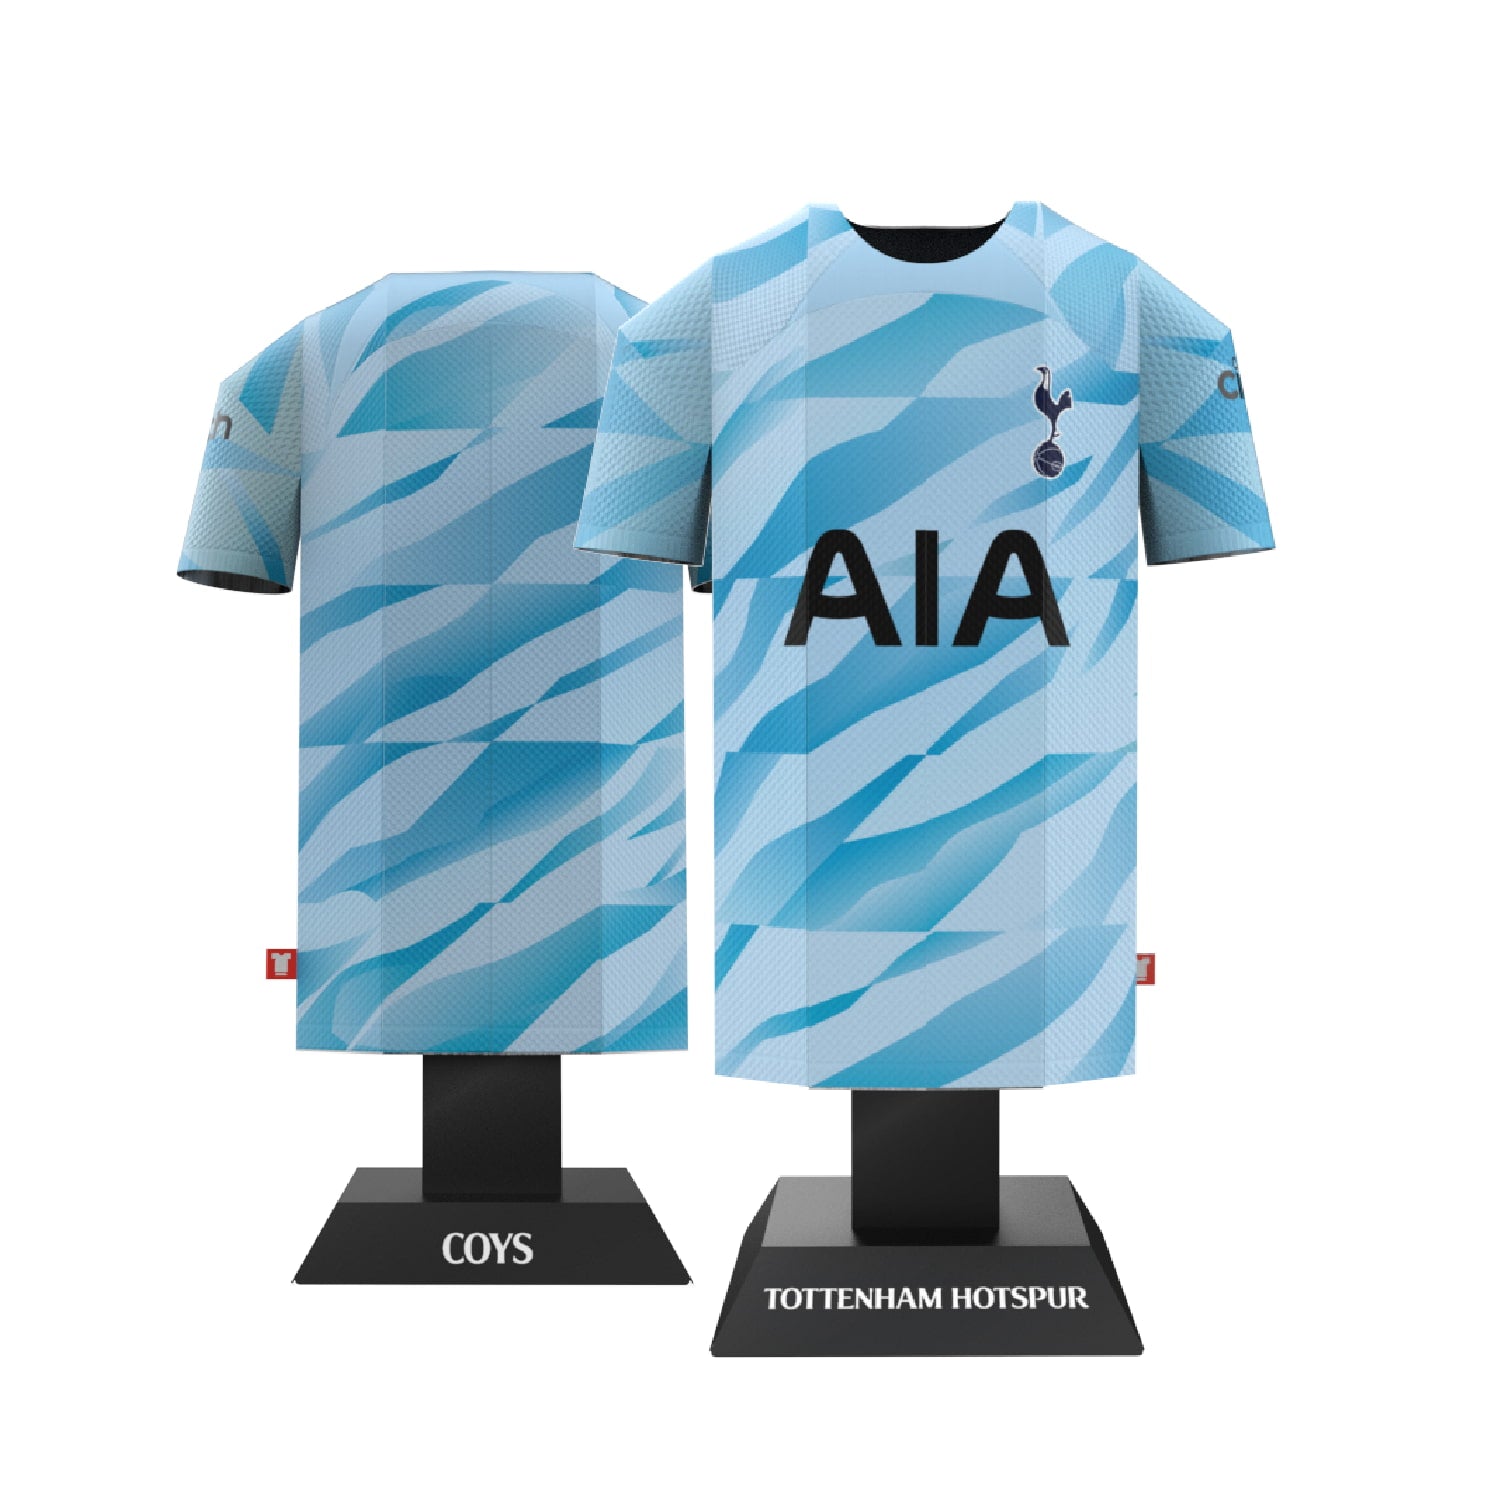 Tottenham goalkeeper kit front and back of shirt